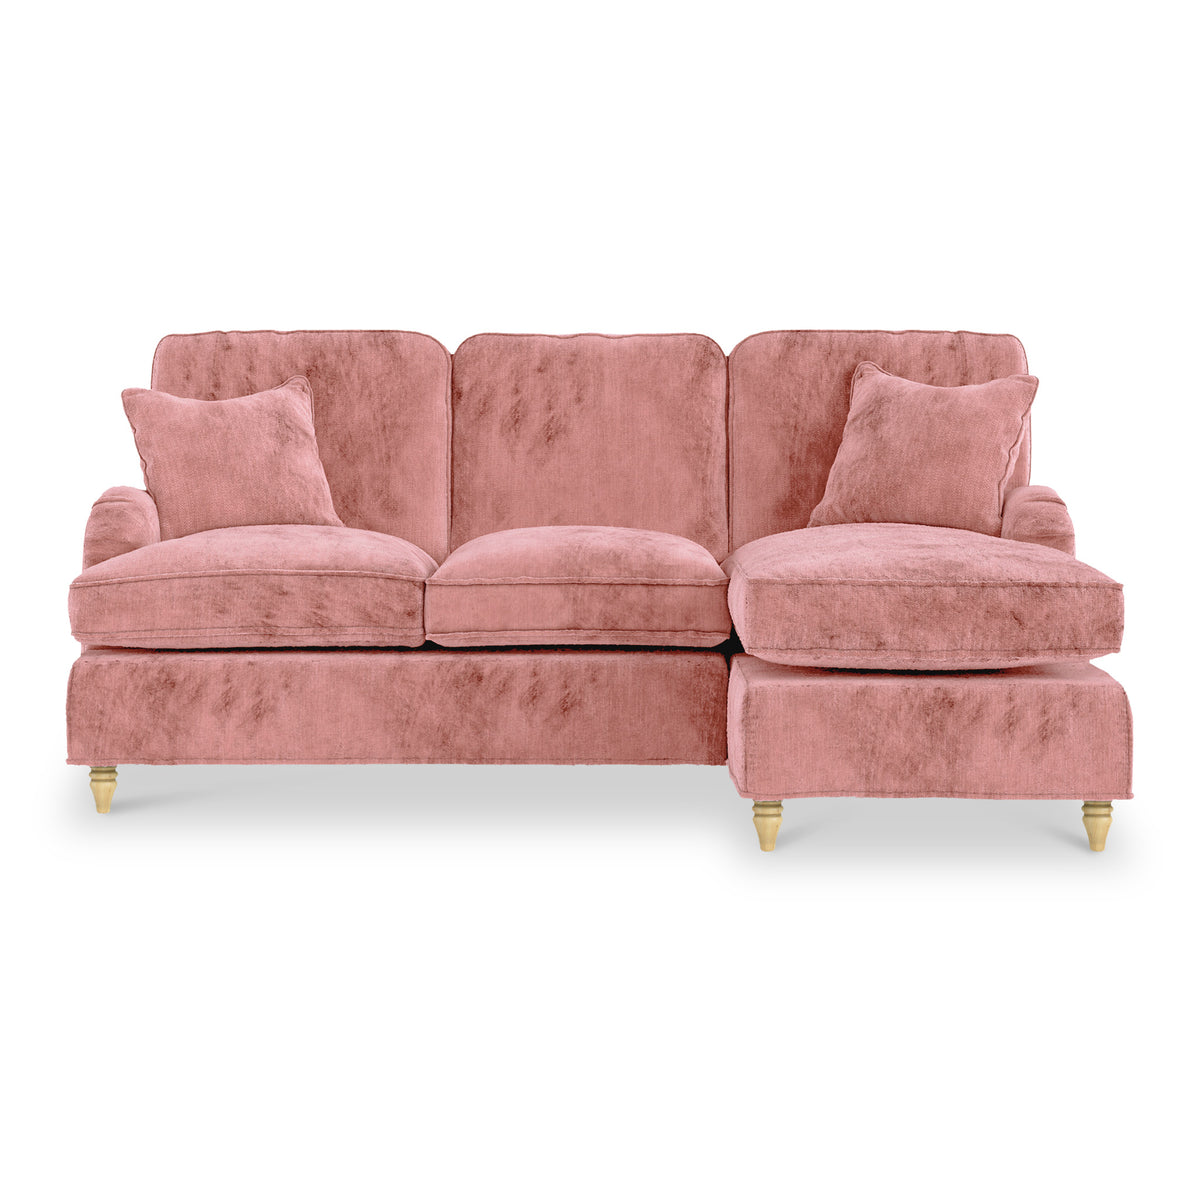 Arthur Blush Pink RH Chaise Sofa from Roseland Furniture